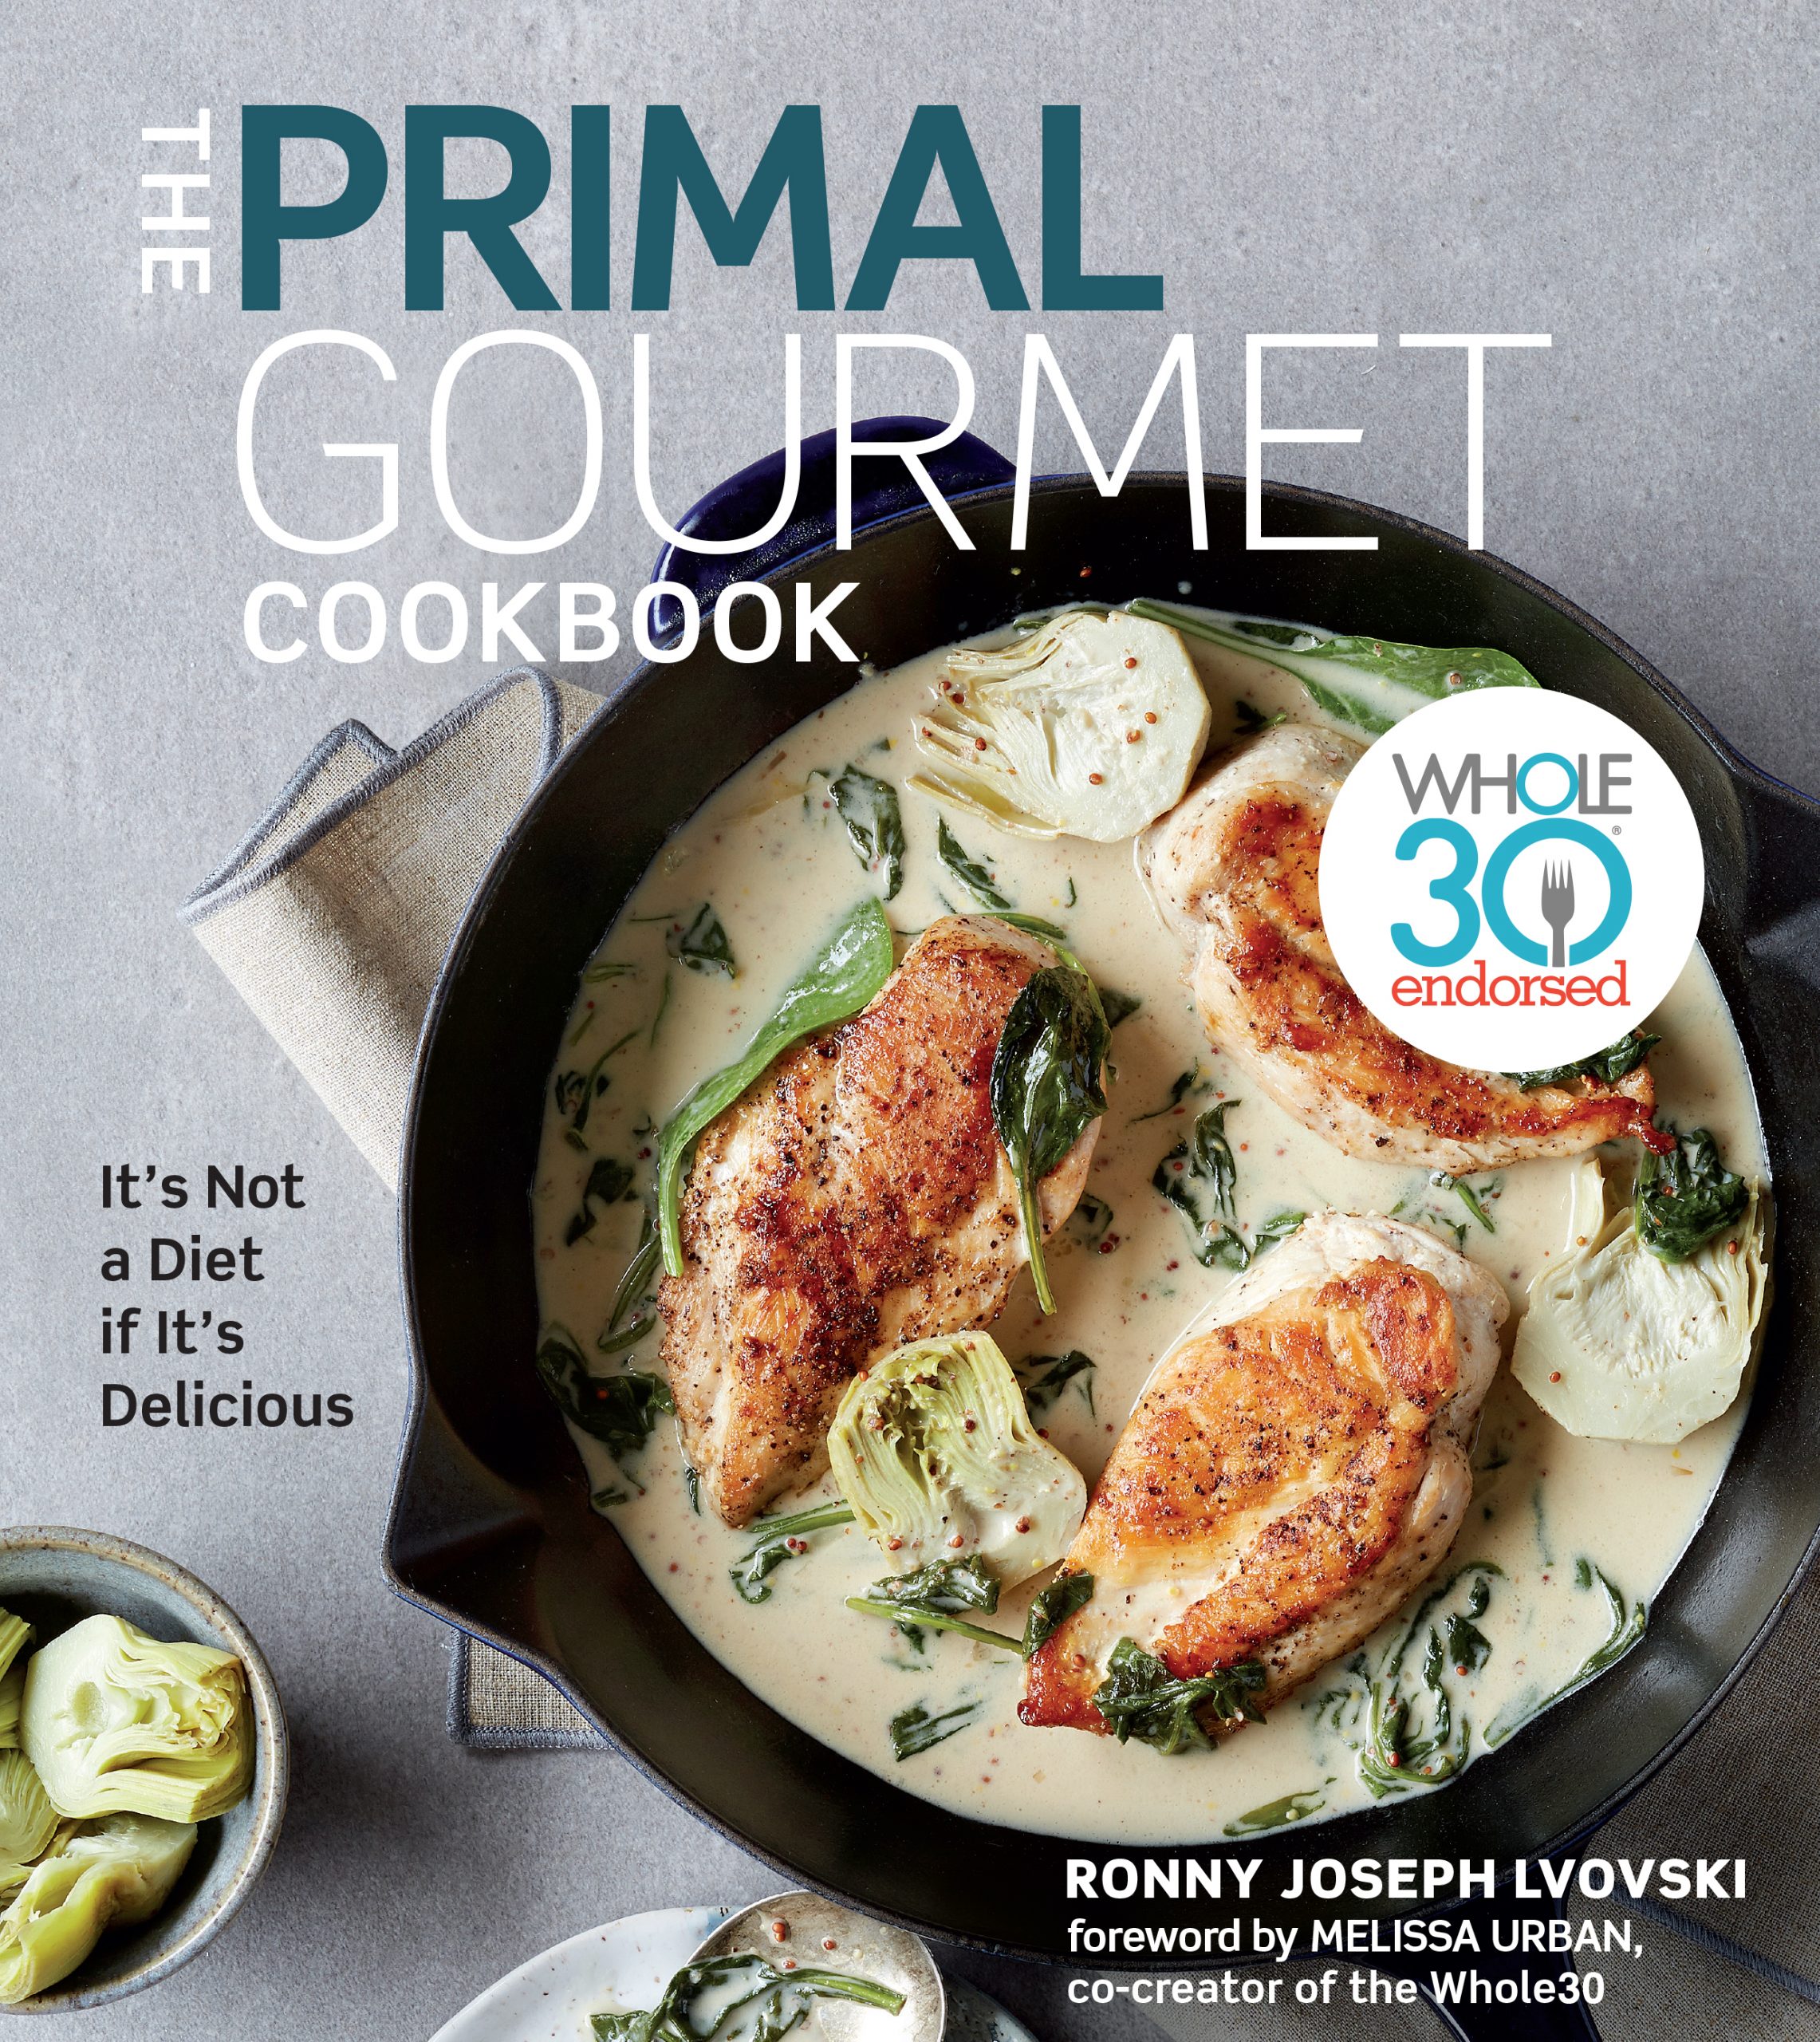 Virtual event with Ronny Joseph Lvovski/Primal Gourmet Cookbook